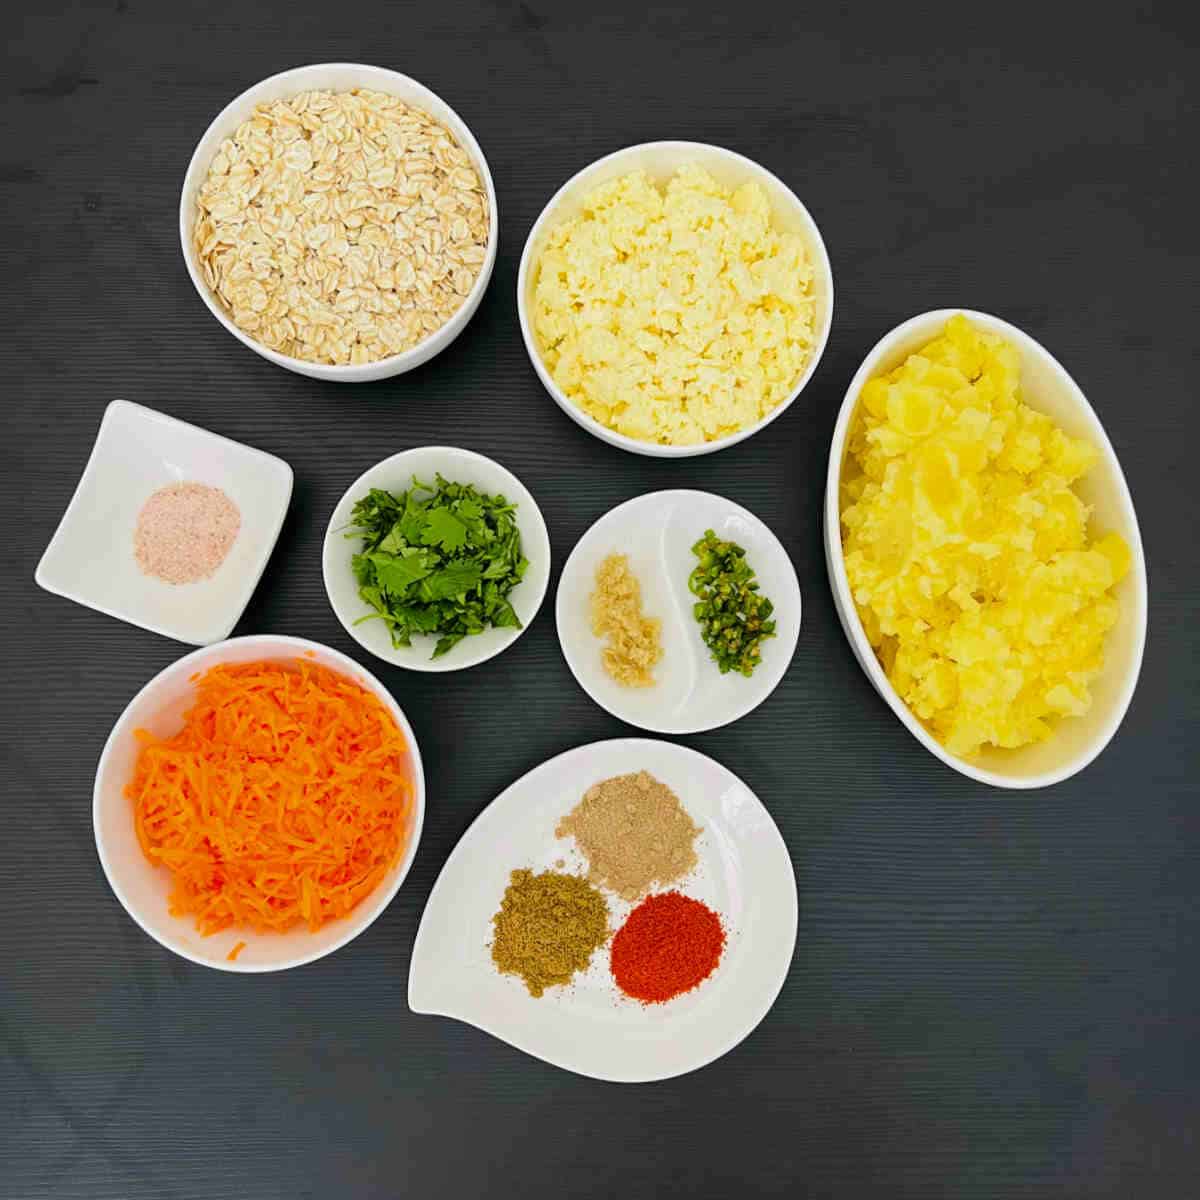 ingredients to make oats paneer cutlet